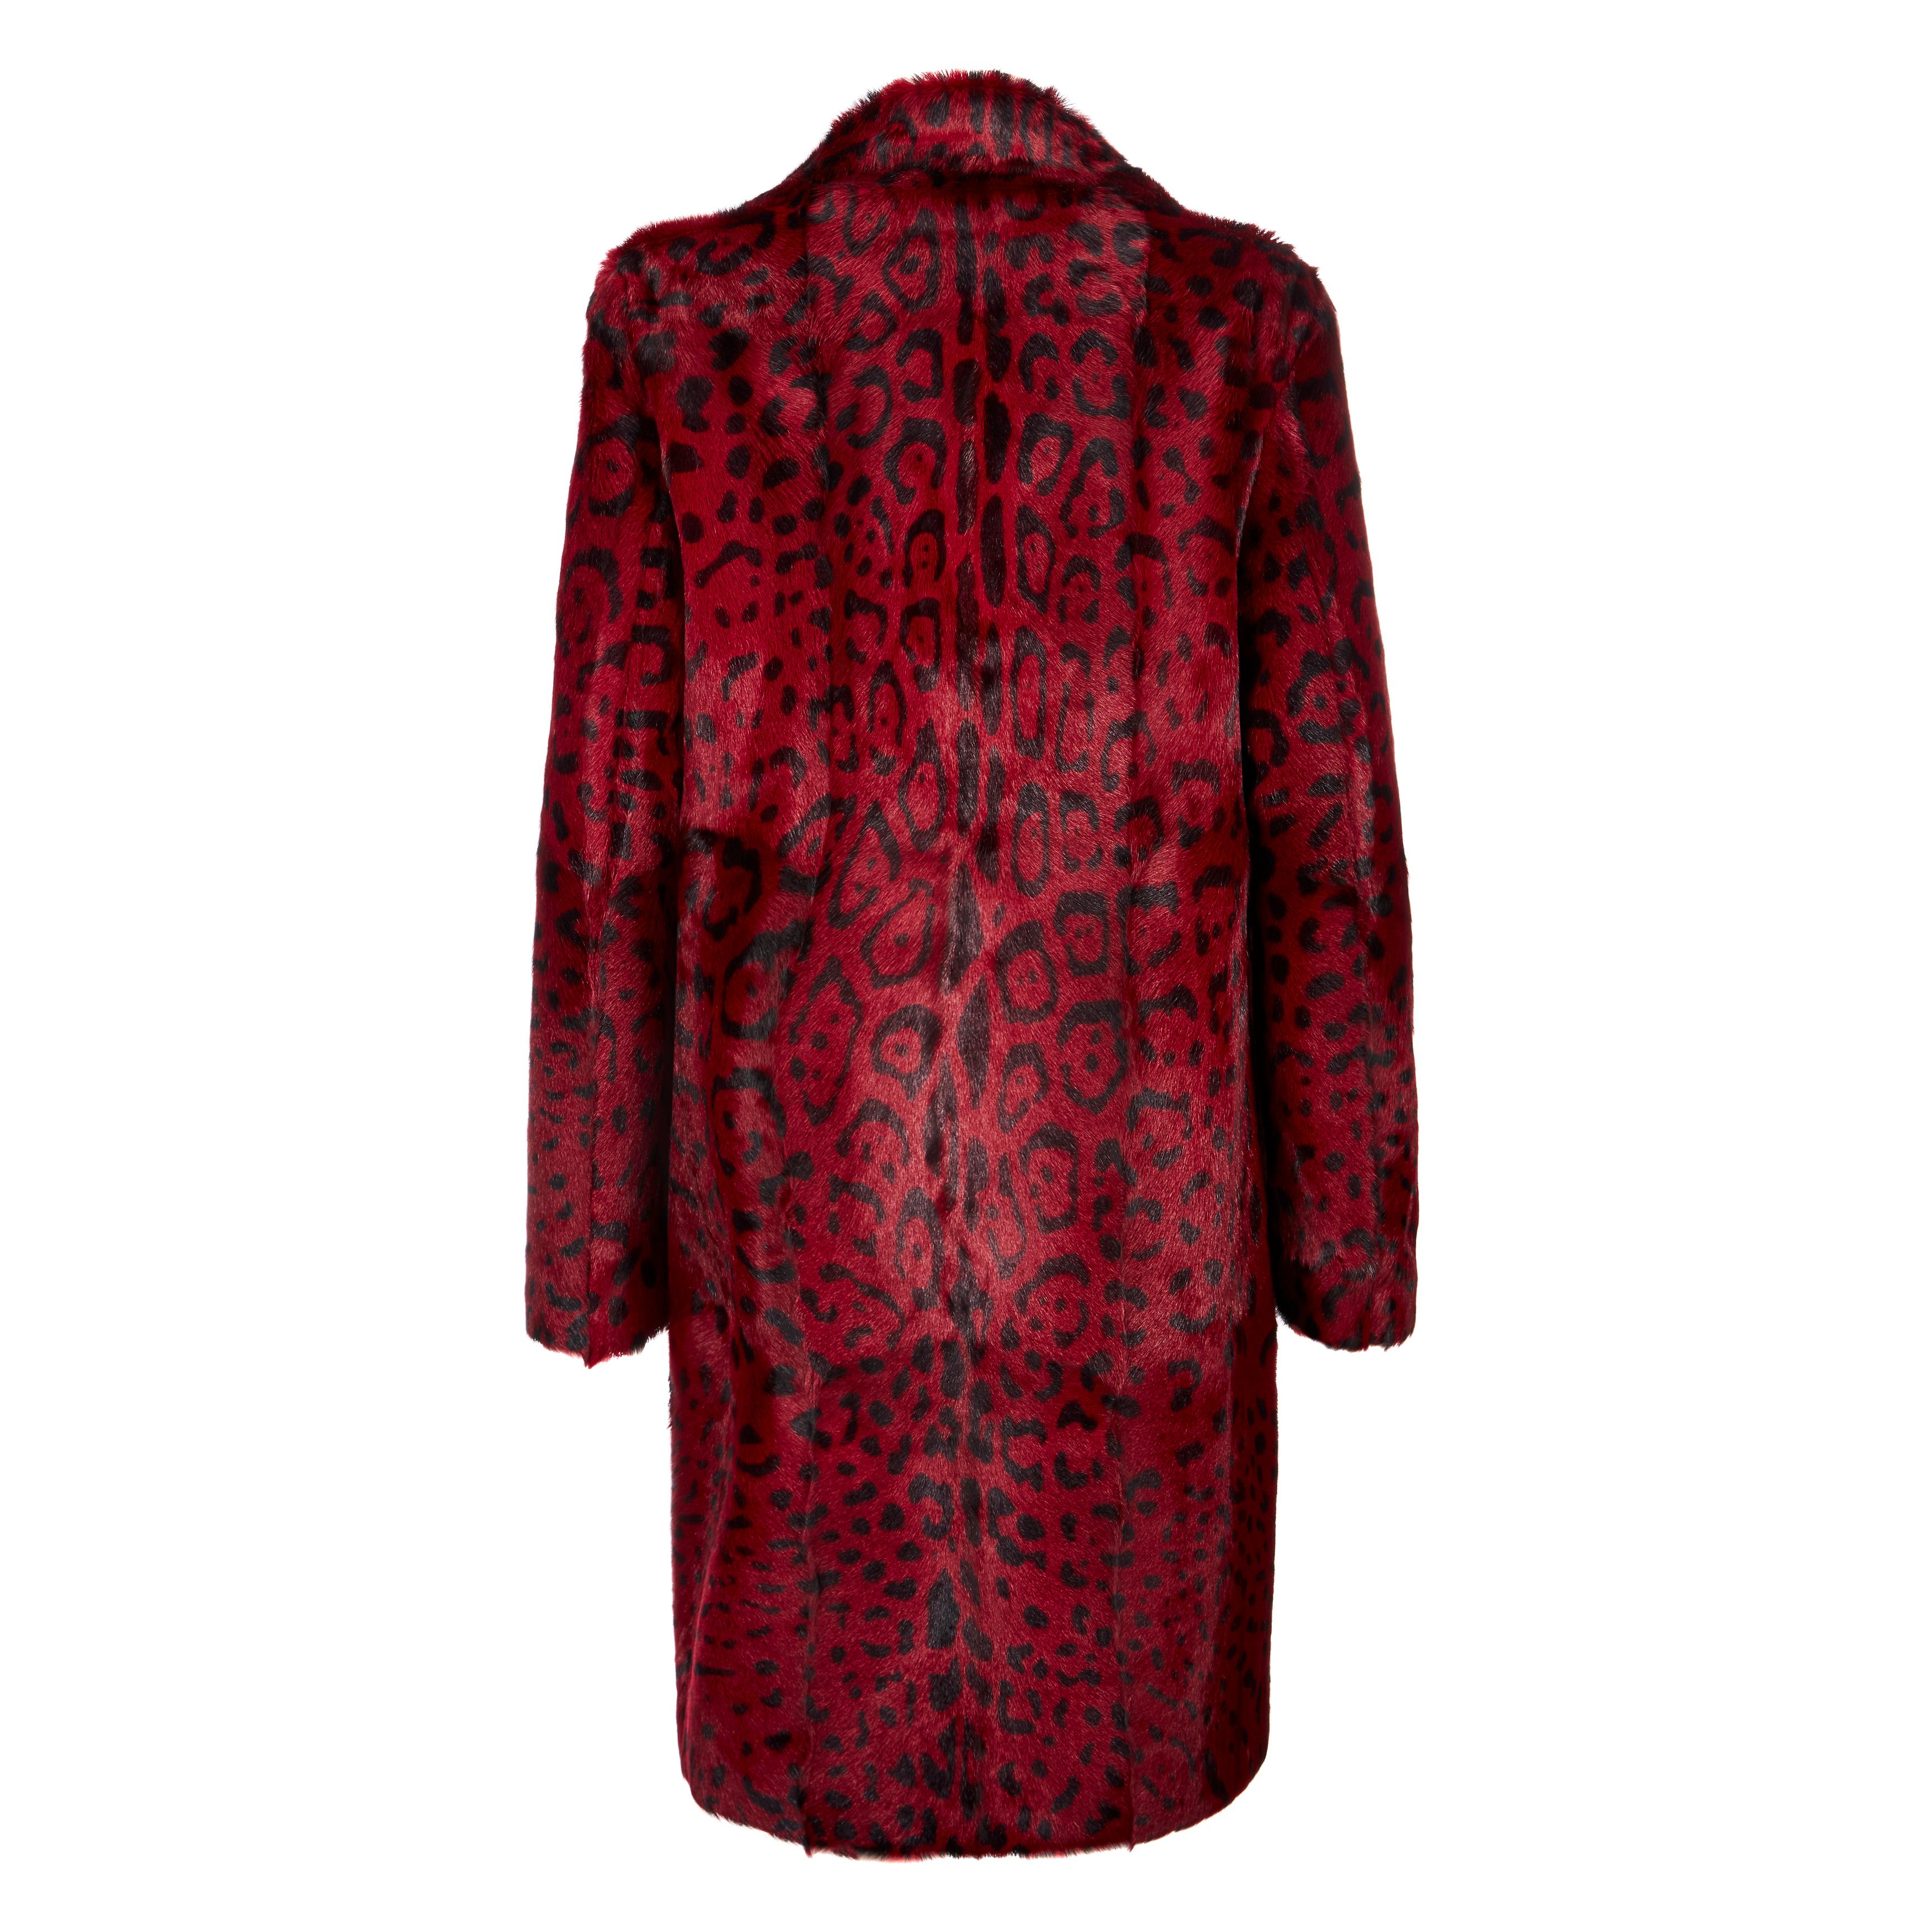 Women's Verheyen London Leopard Print Coat in Red Ruby Goat Hair Fur UK 12 - Brand New 